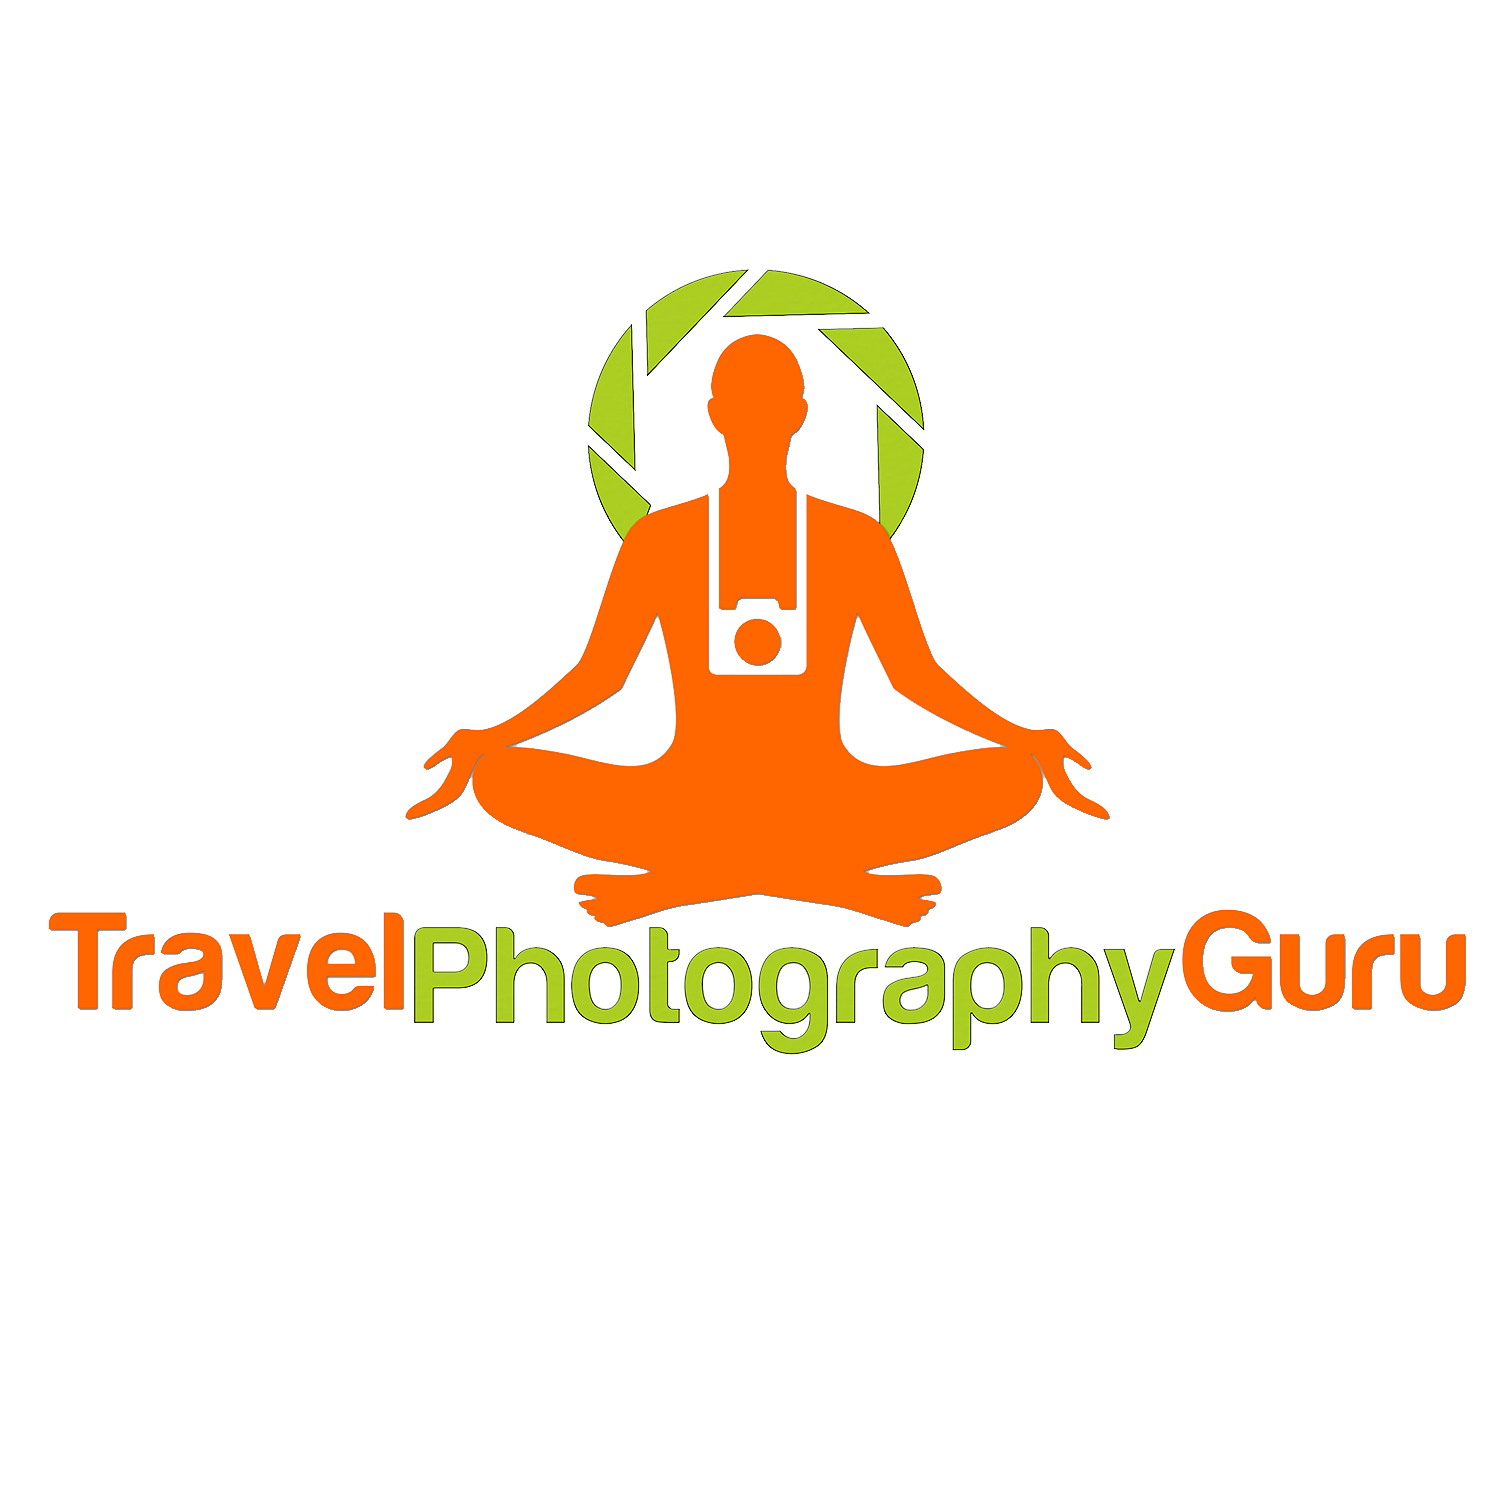 Travel Photography Guru